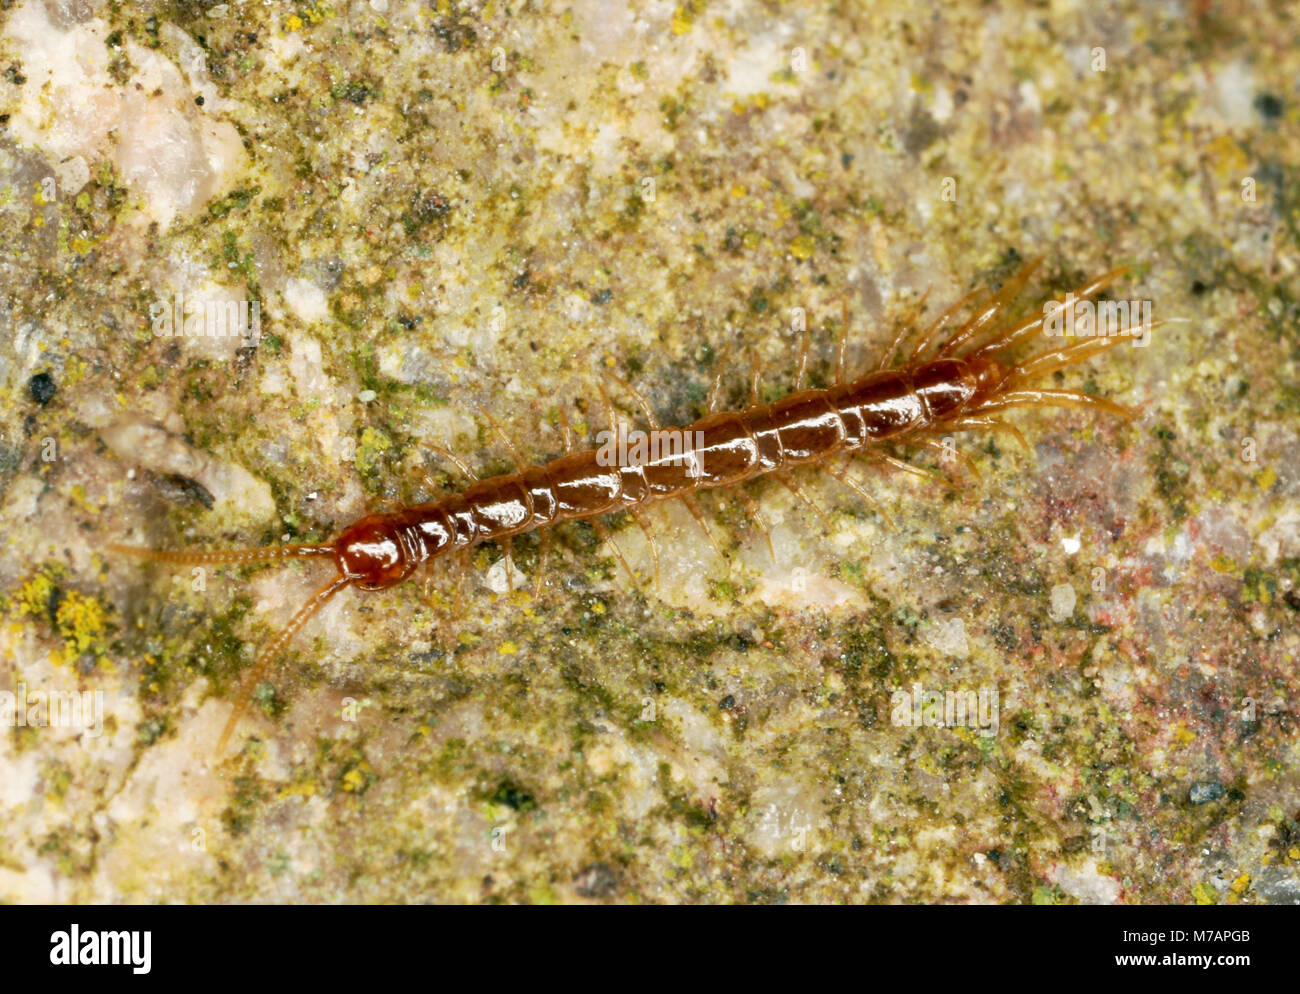 Brown centipede (Lithobius forficatus) Stock Photo